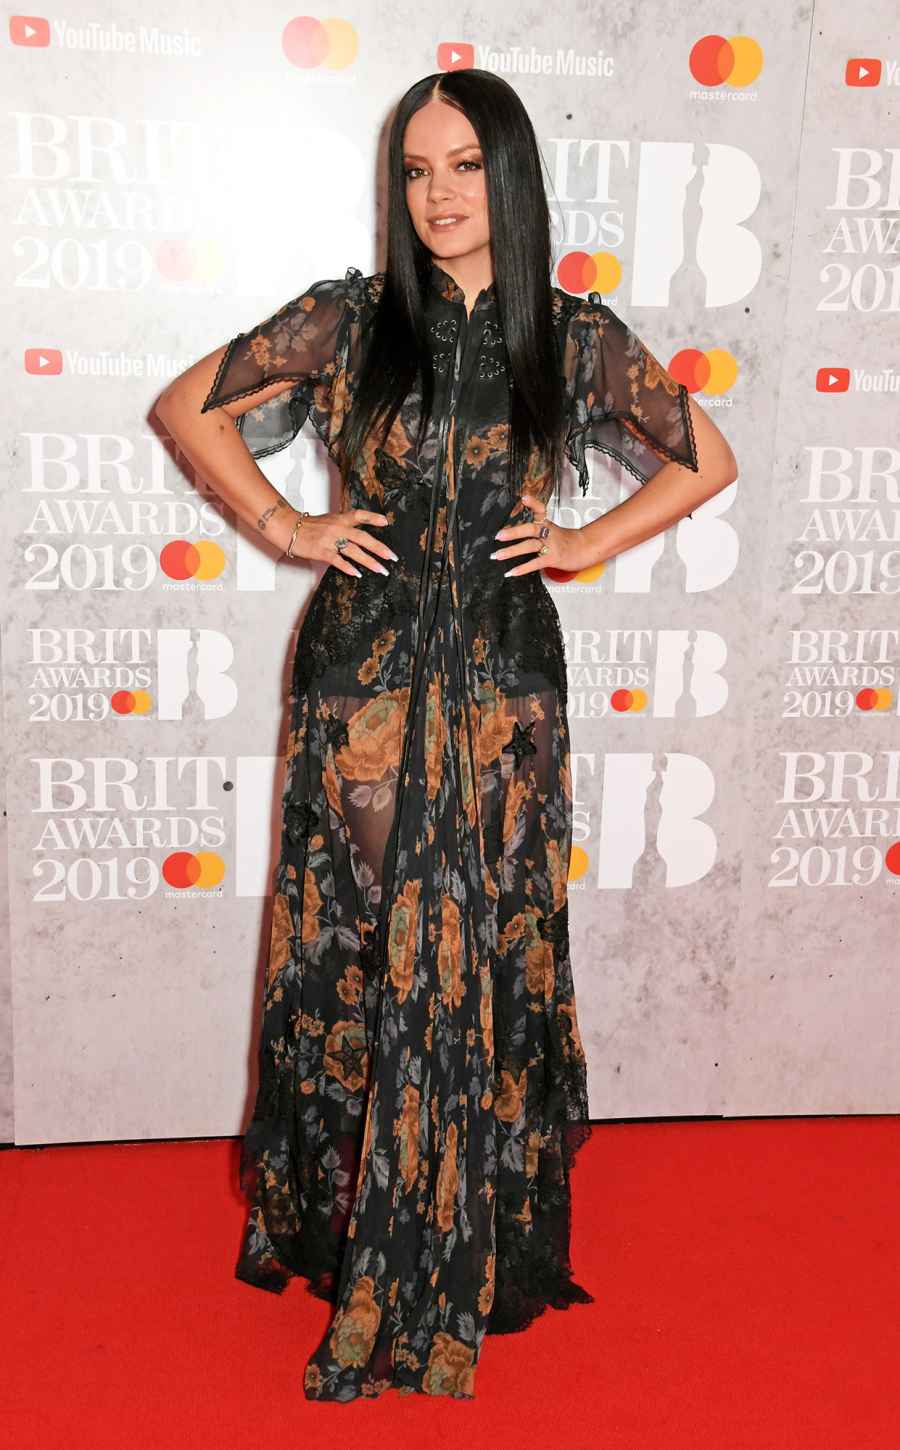 Lily Allen brit awards red carpet 2019